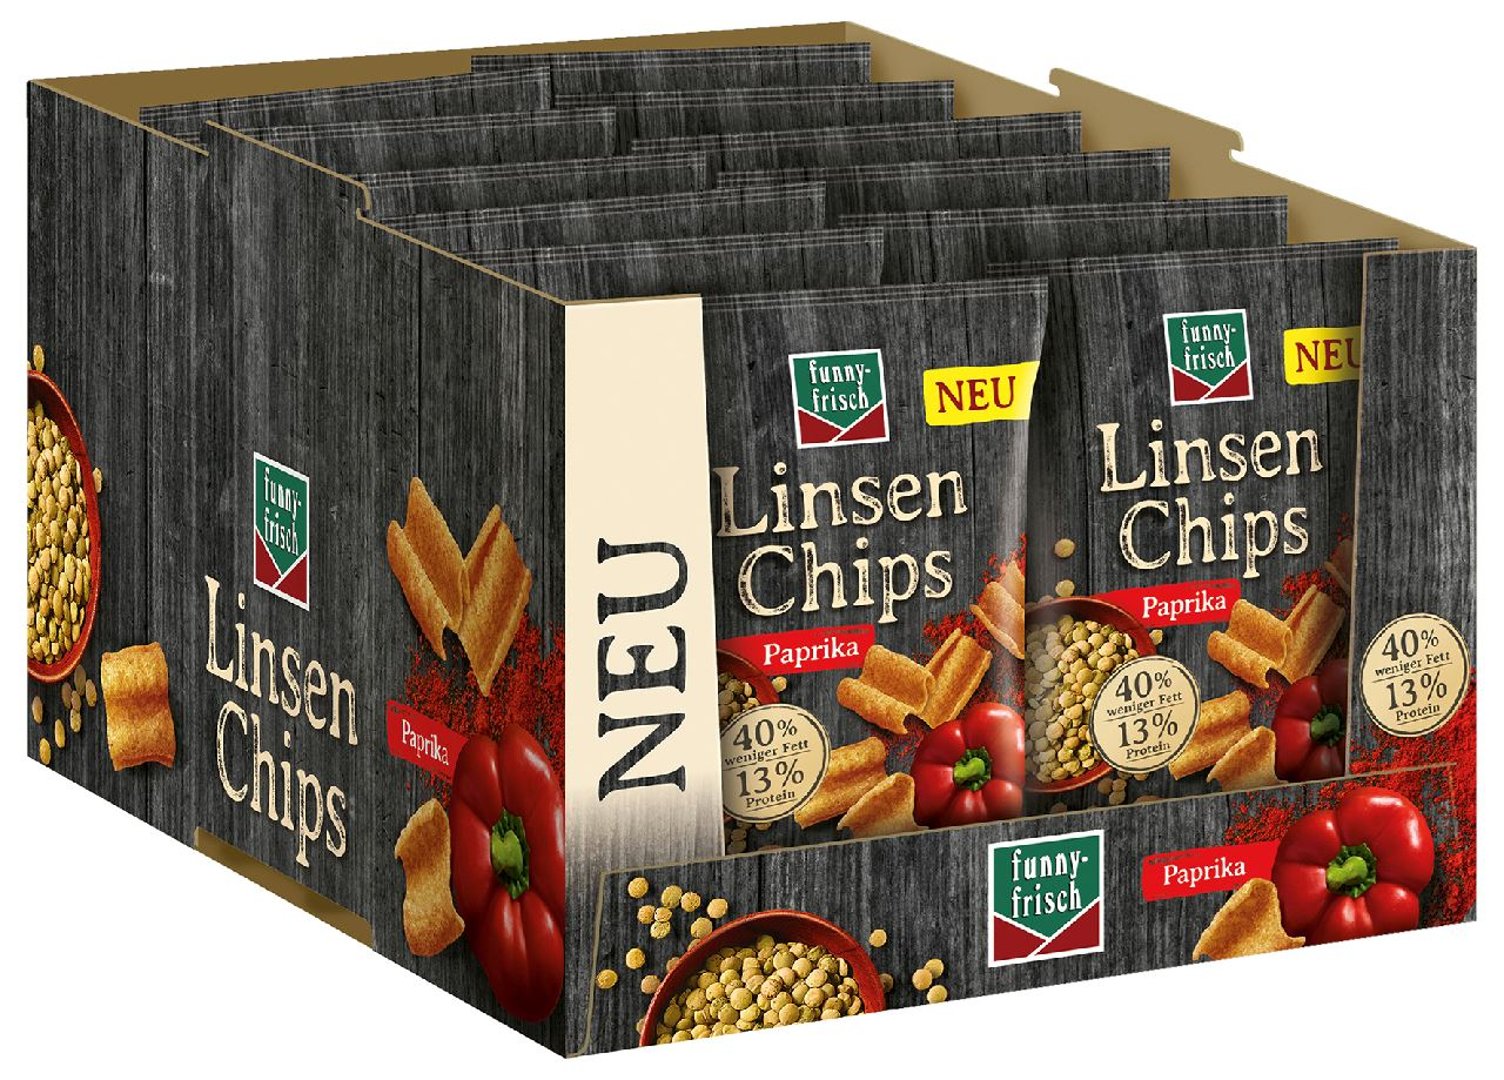 funny-frisch - Linsen Chips Paprika - 1 x 90 g Beutel